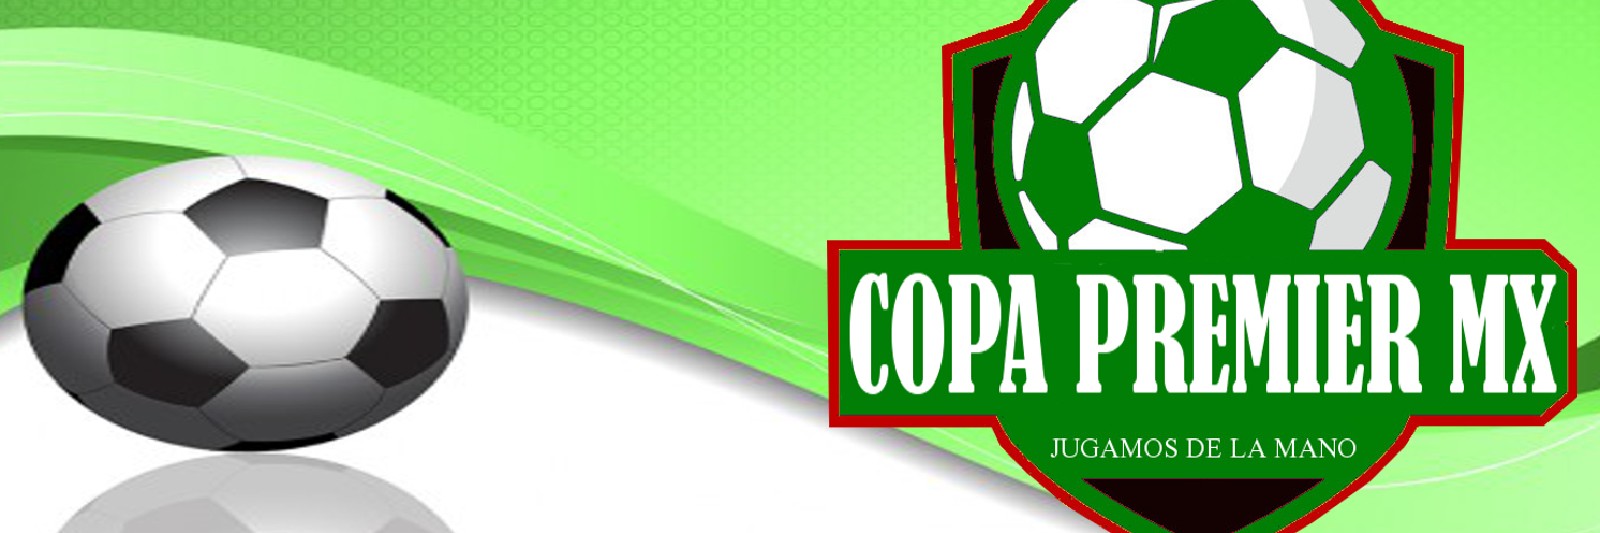 Copa Premier MX